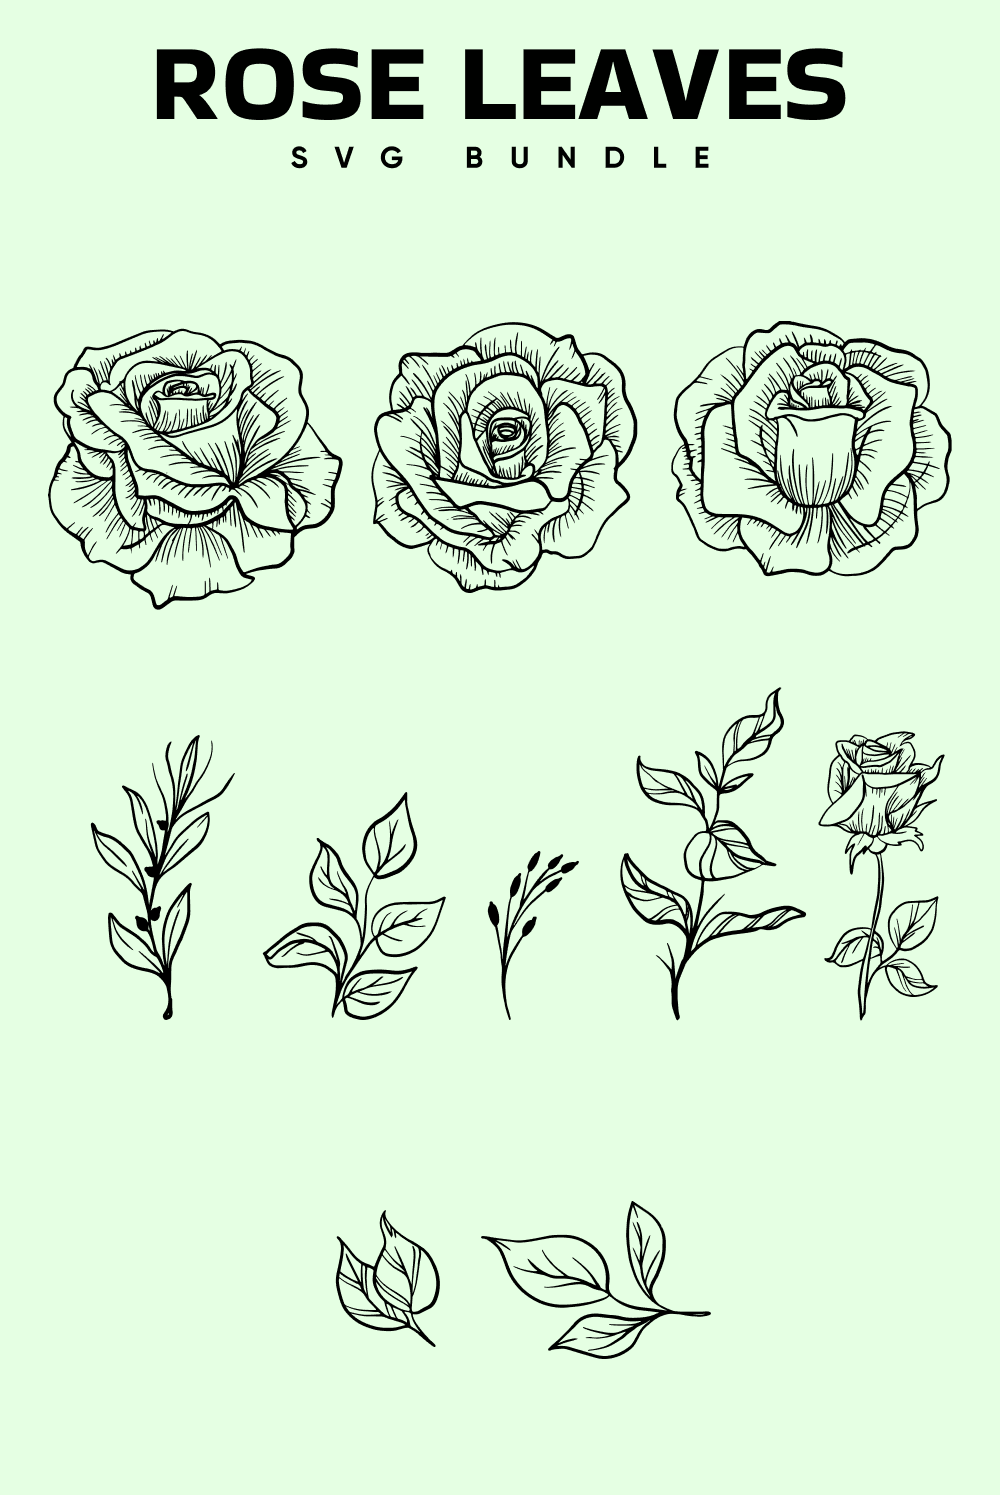 Rose Leaves Svg - Pinterest.